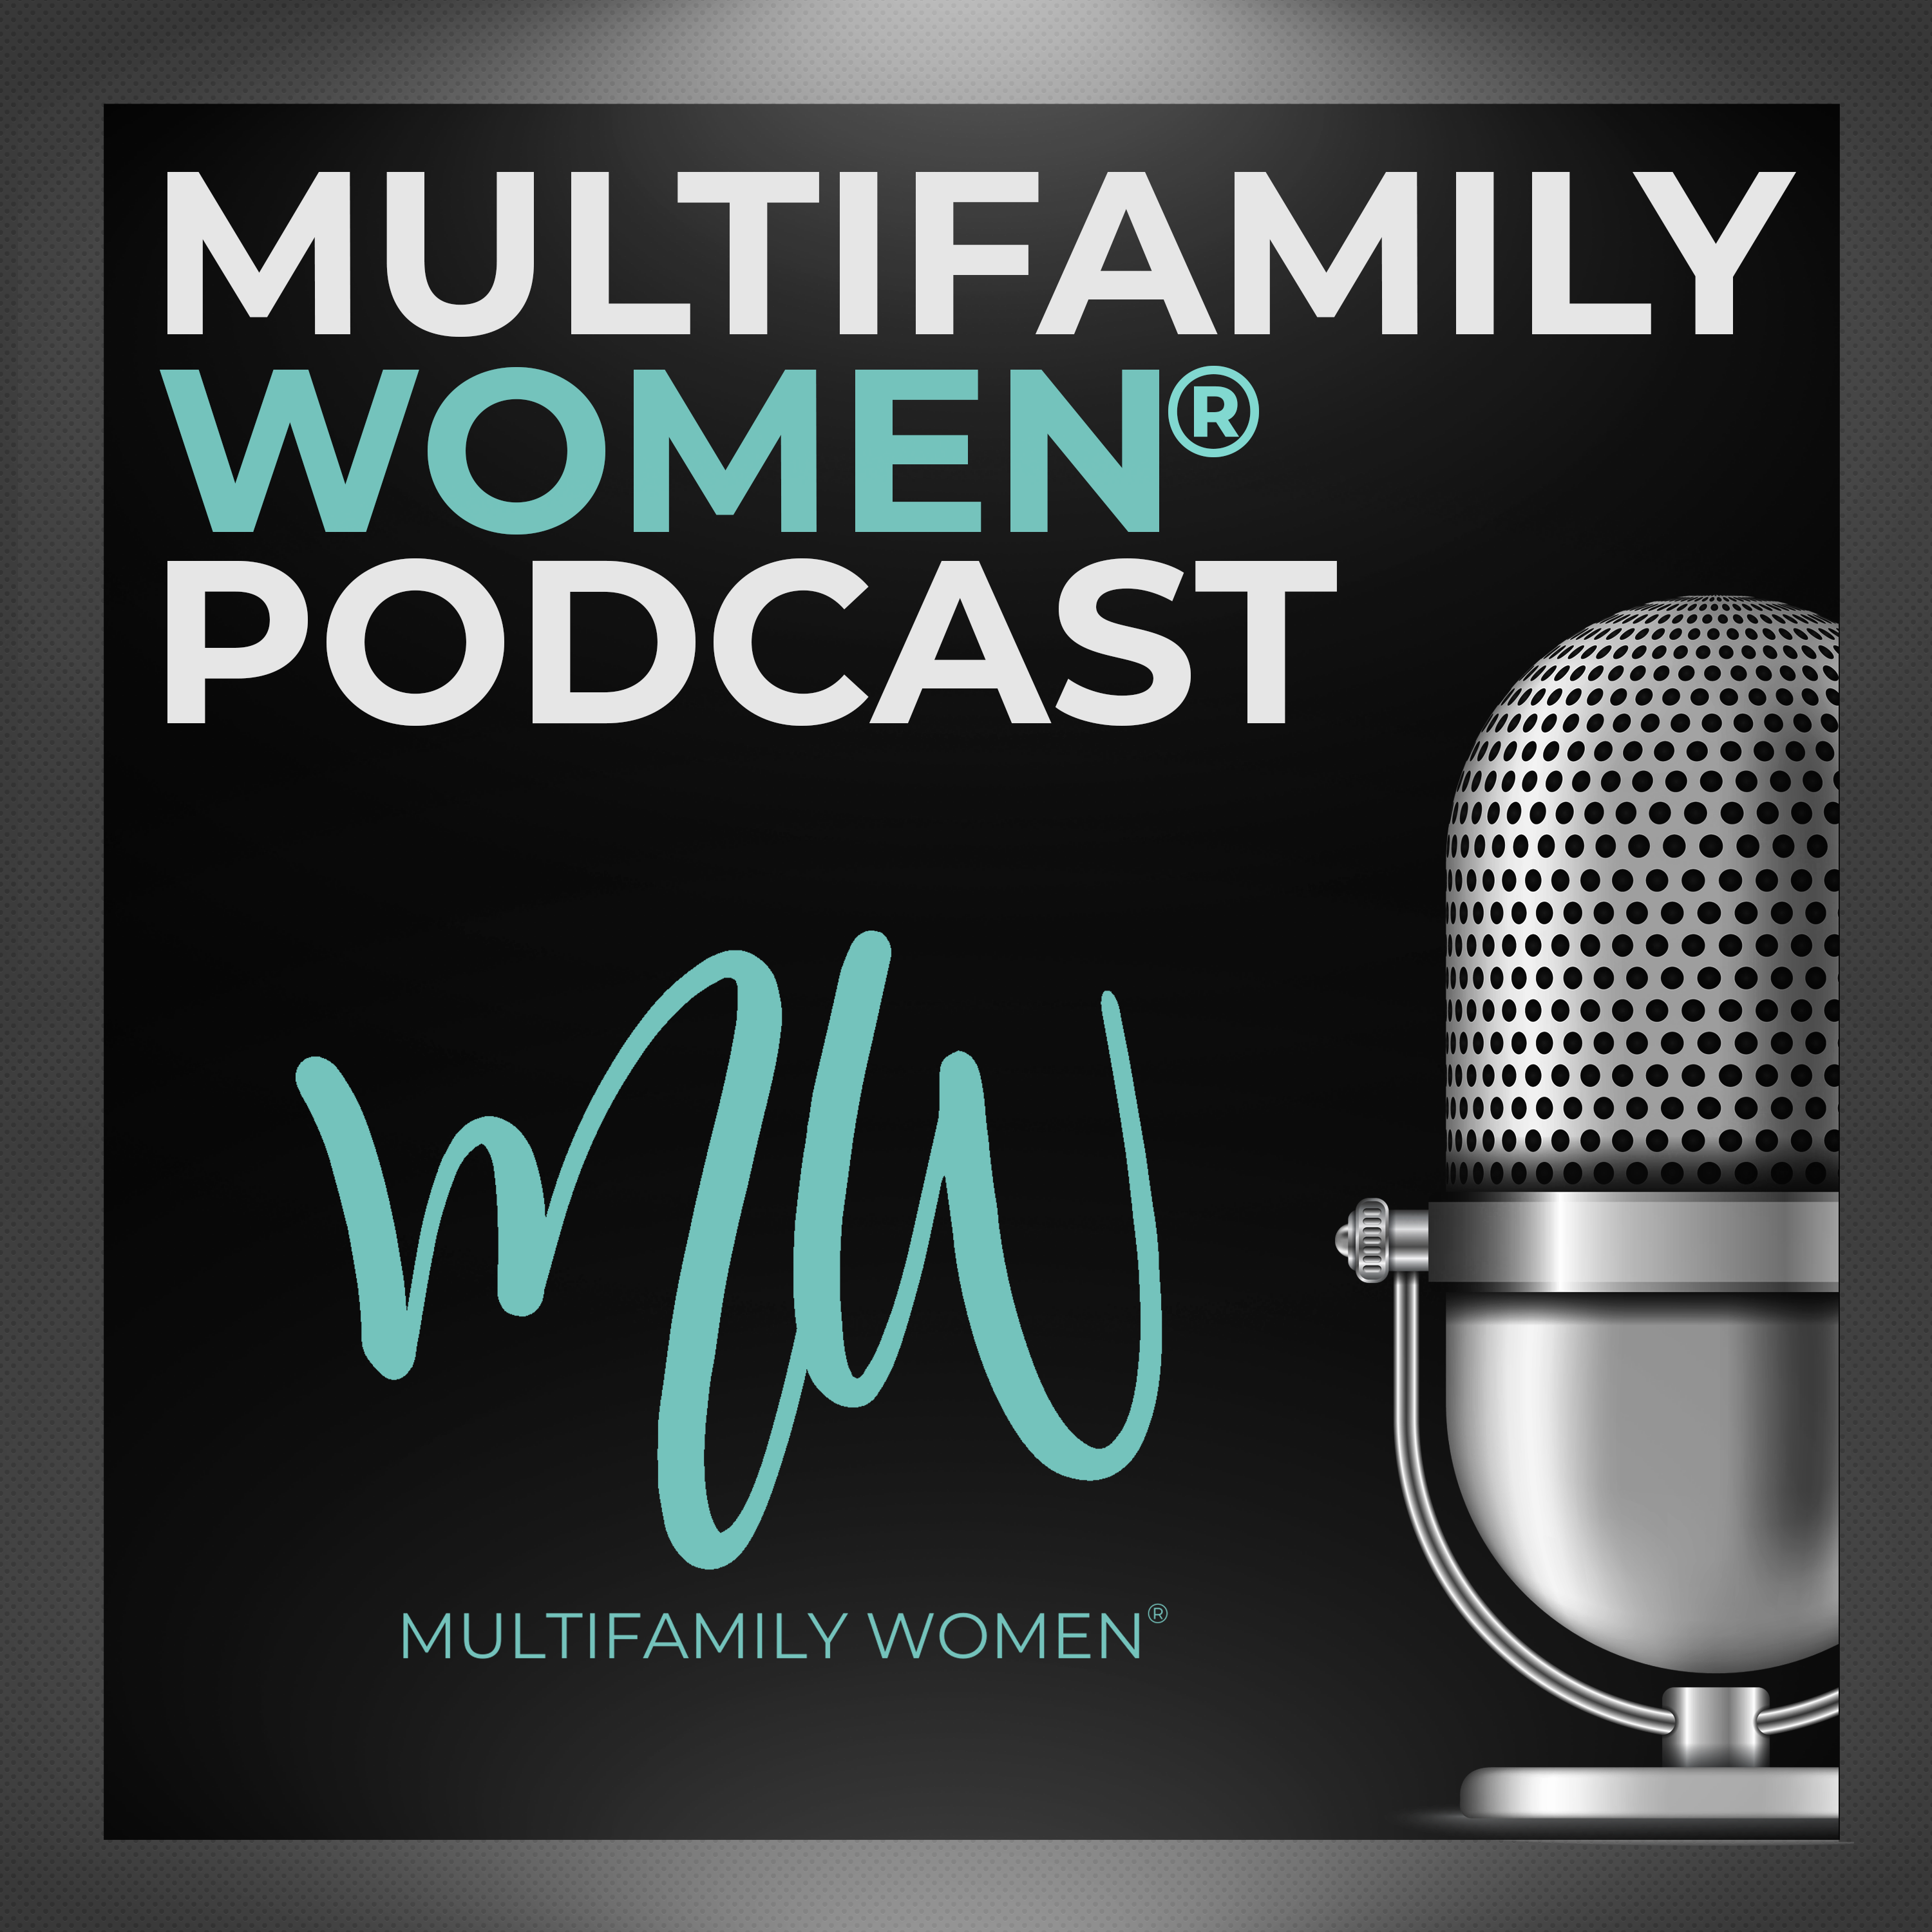 Multifamily Women® Podcast